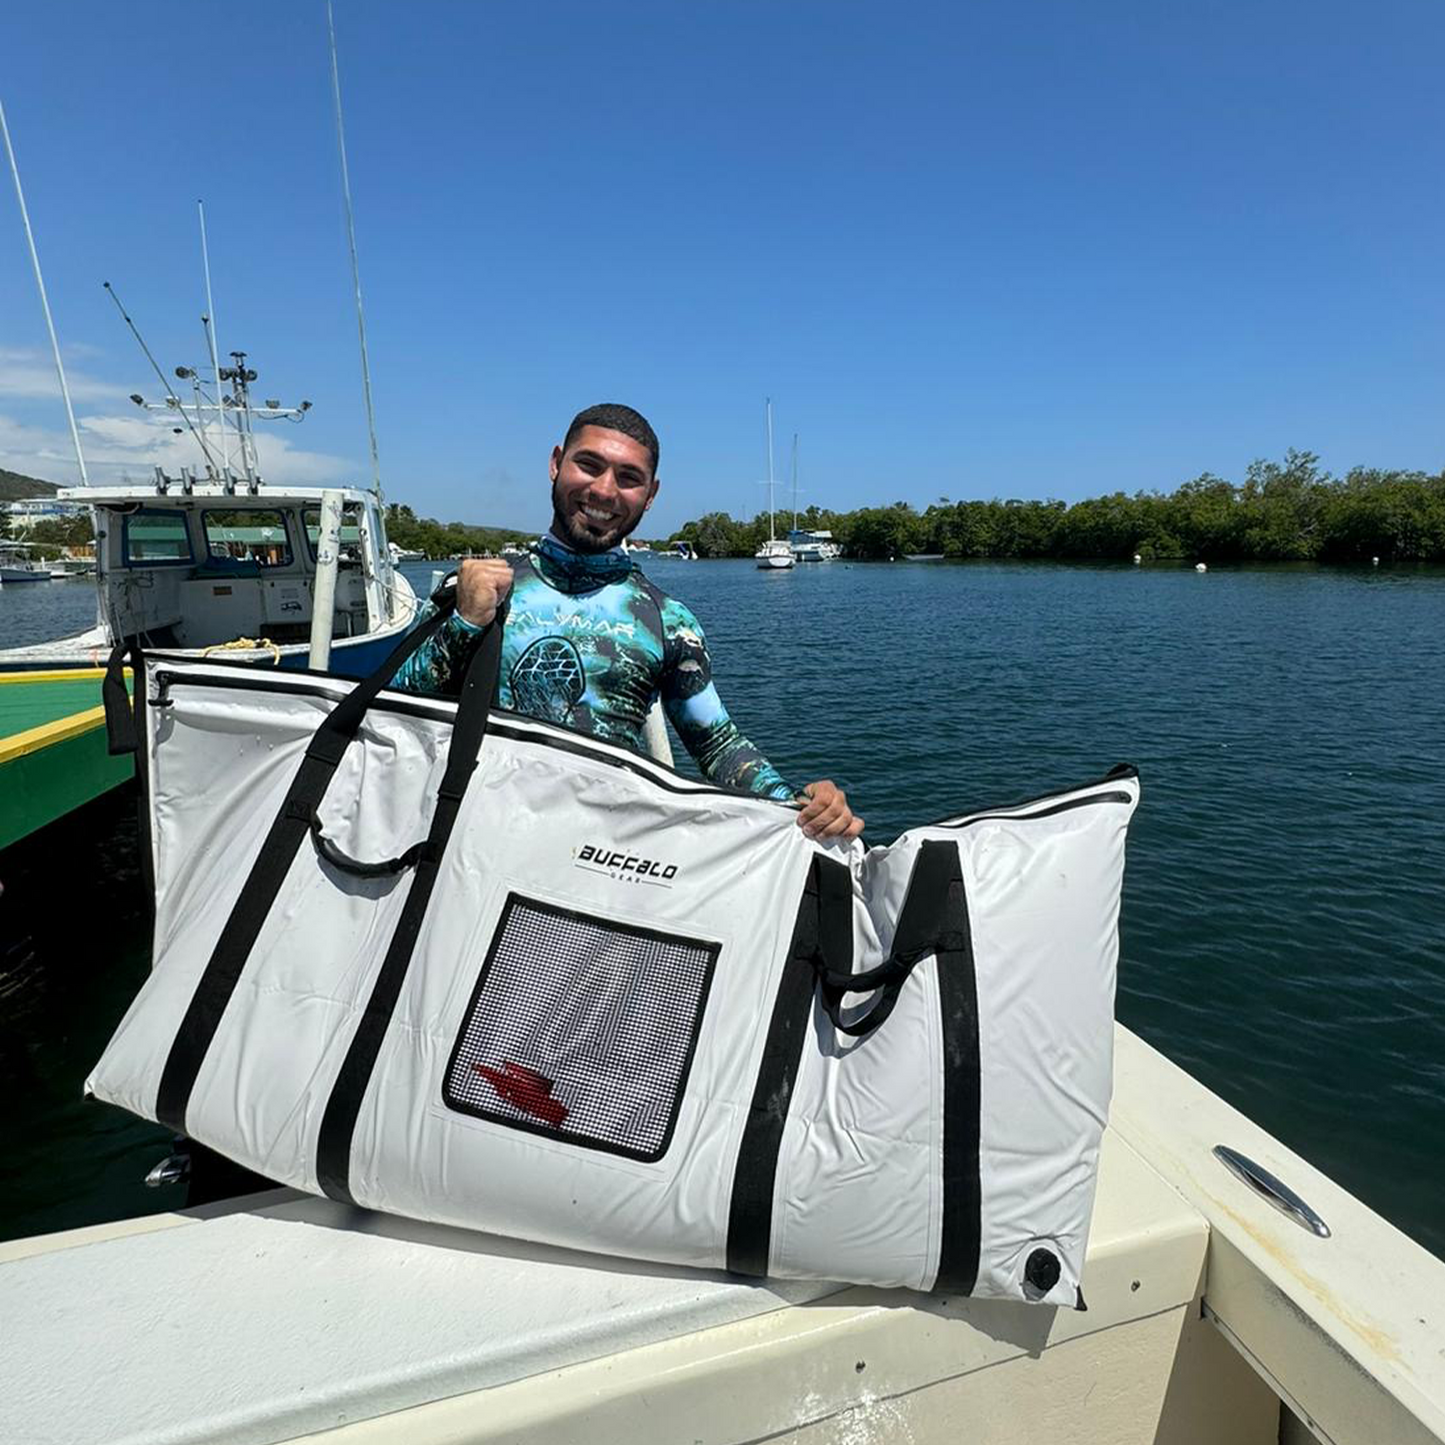 60x20'' Collapsible Fish Cooler Bag with Waterproof Zipper - Buffalo Gear 